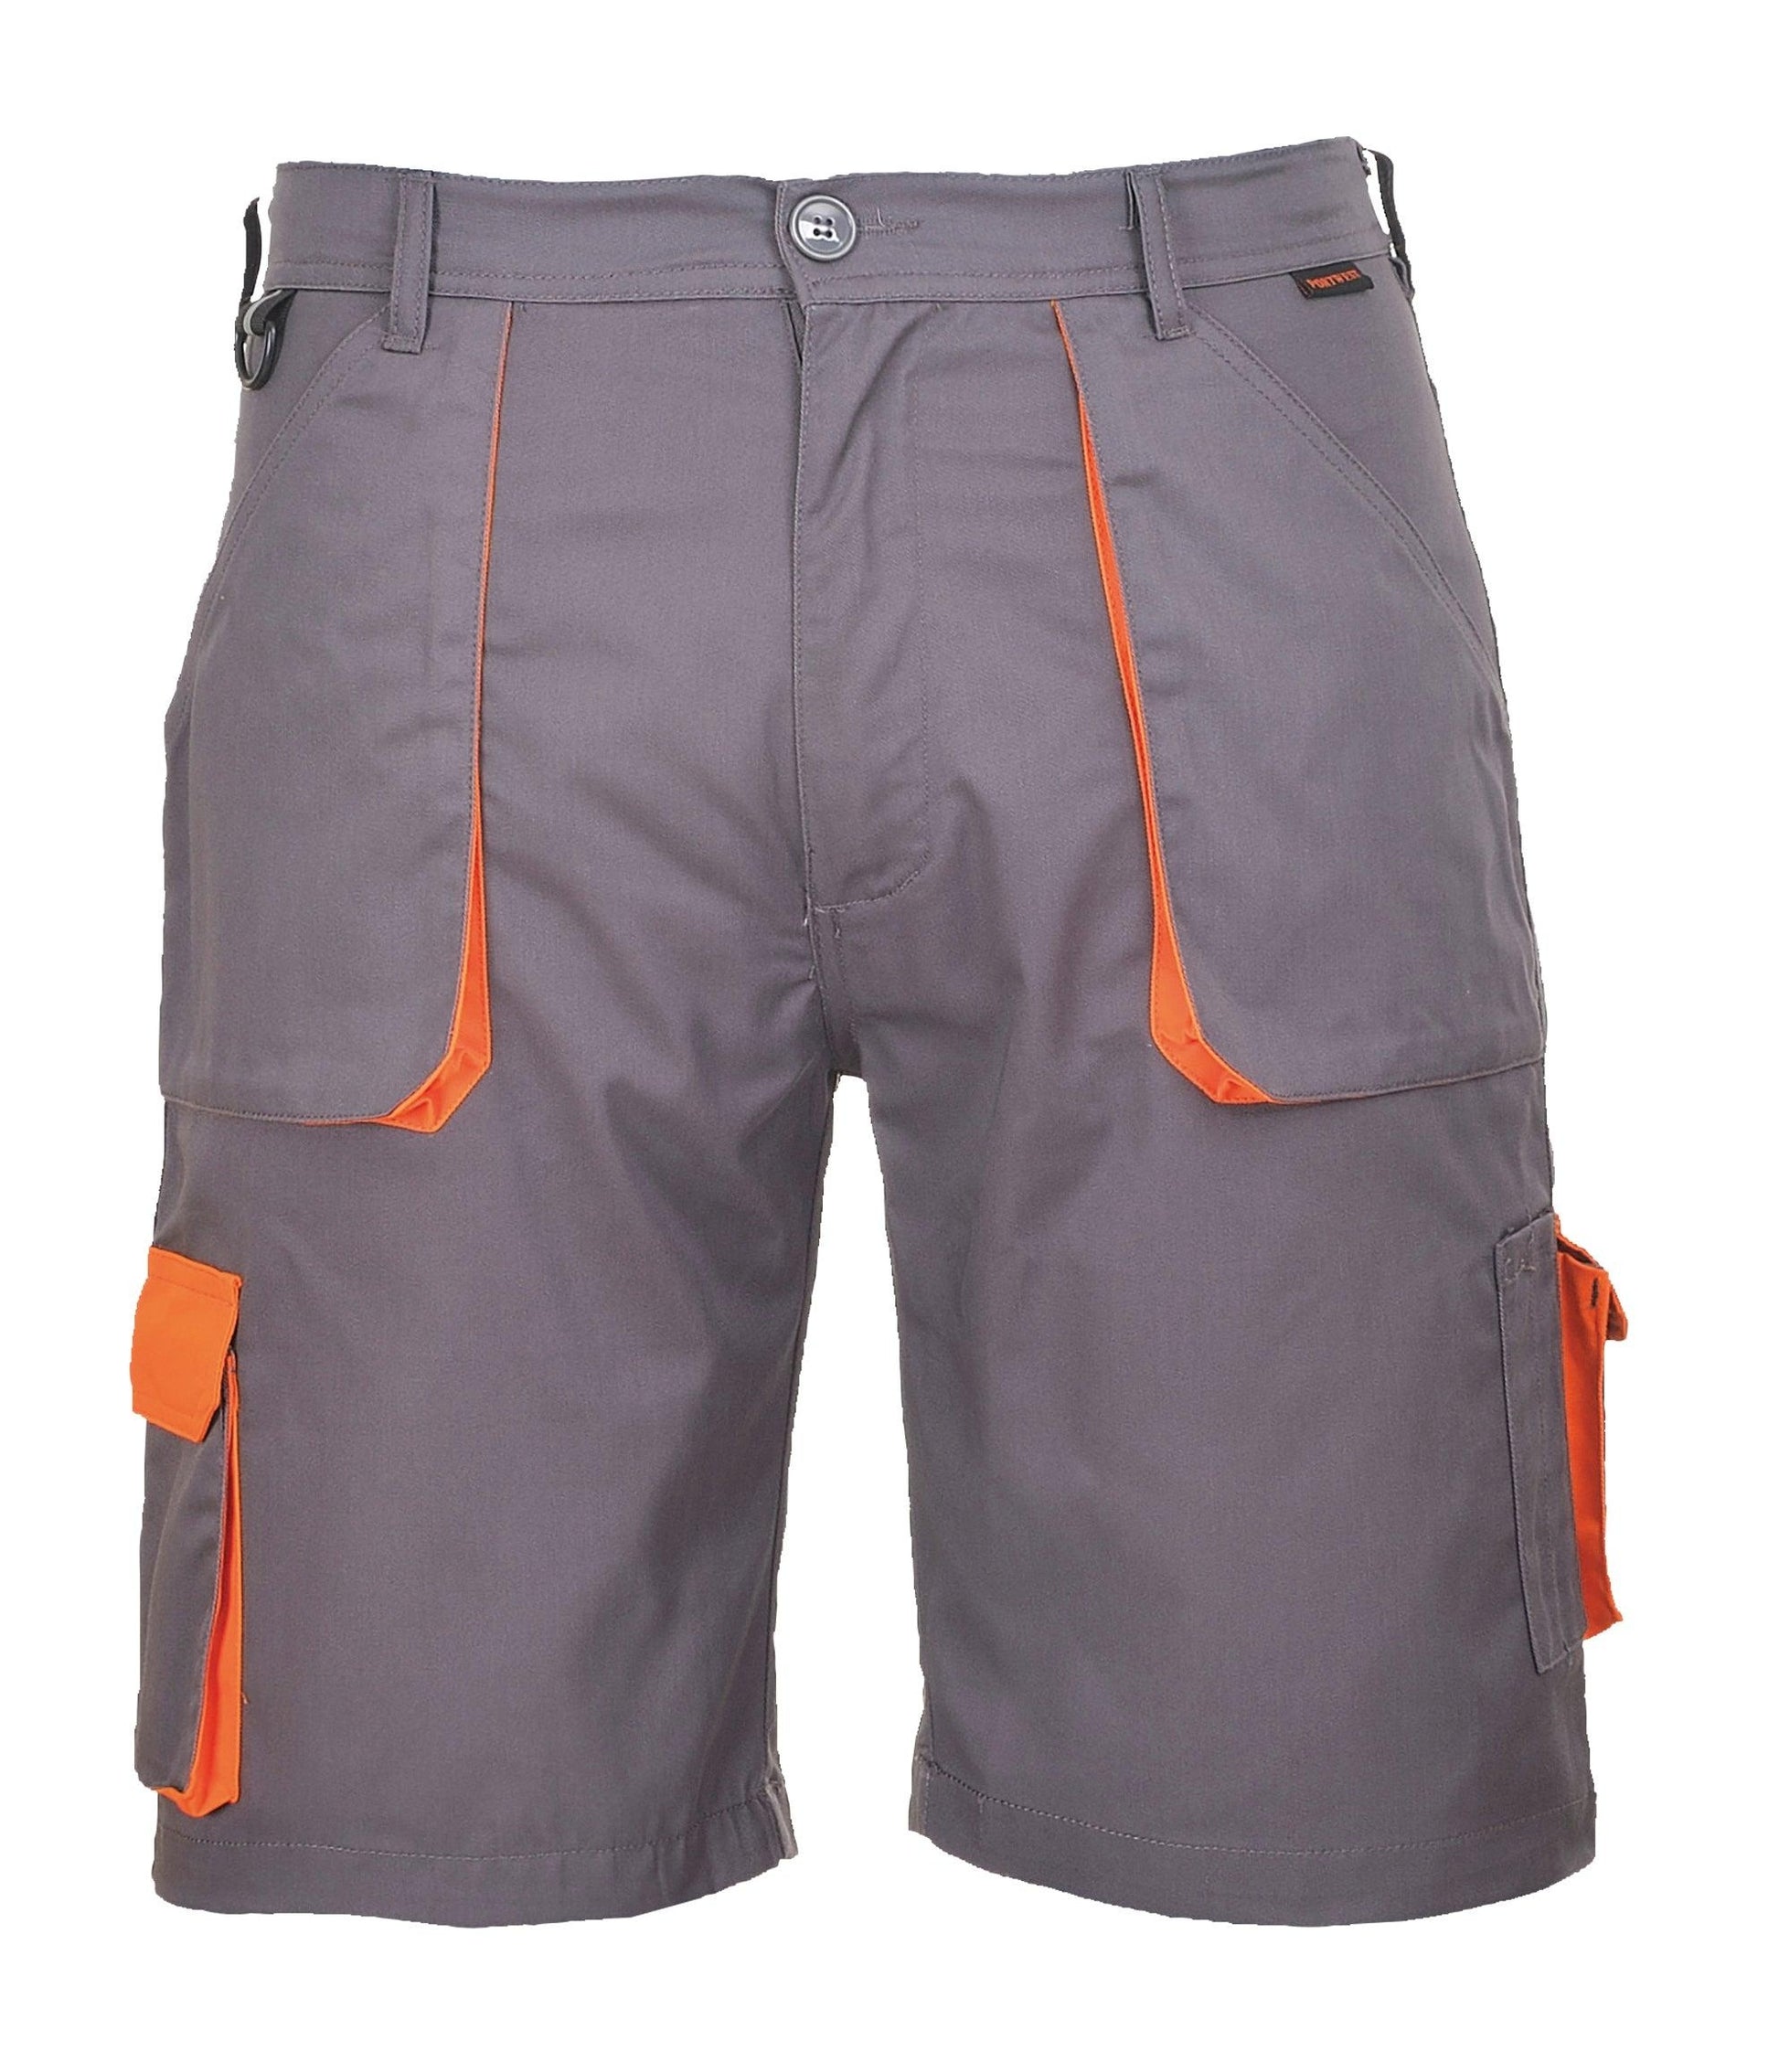 Contrast shorts PW025 - Trustsport